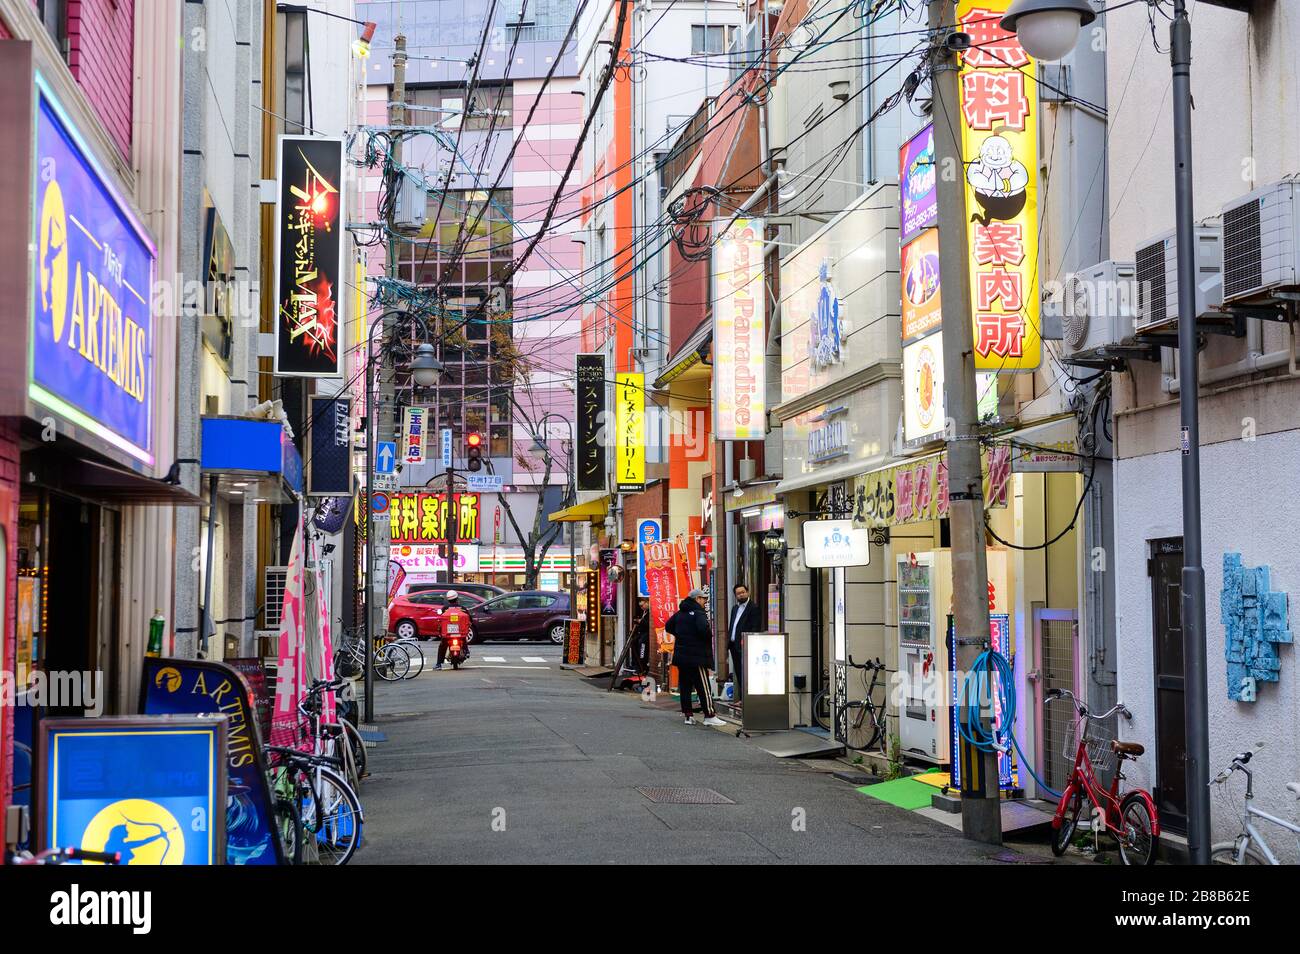 Osaka red light district